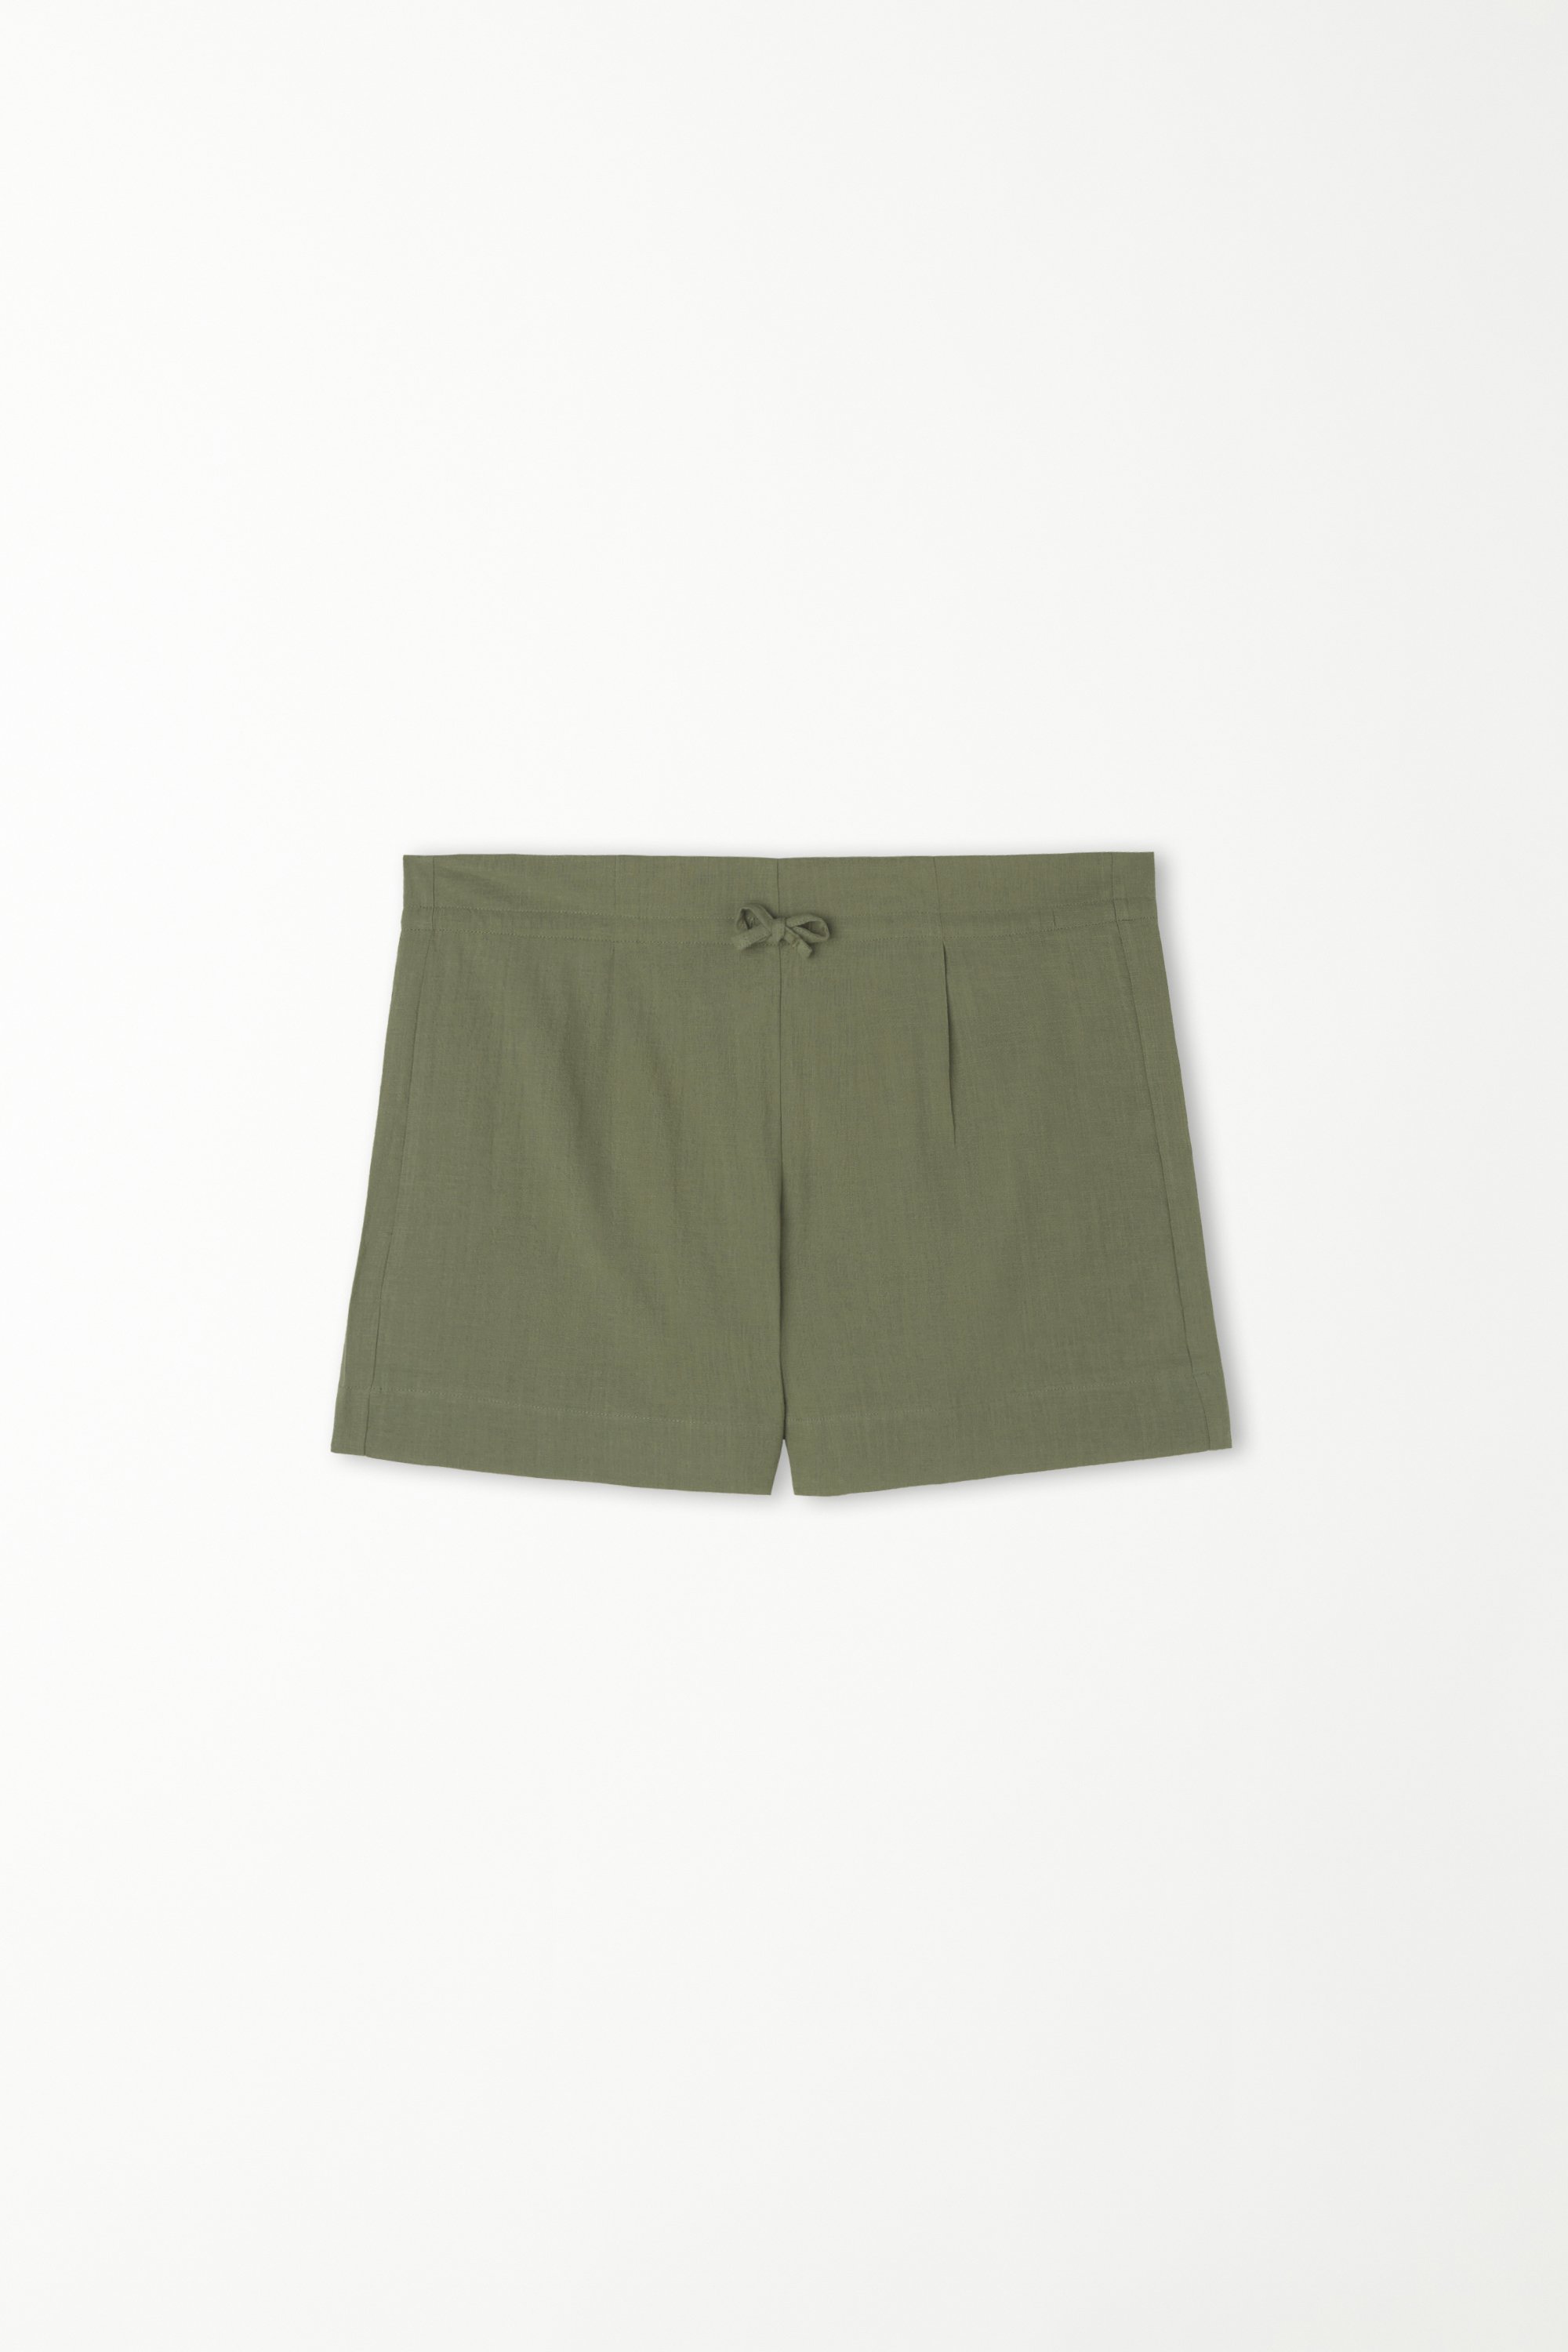 Drawstring Shorts in 100% Super Light Cotton